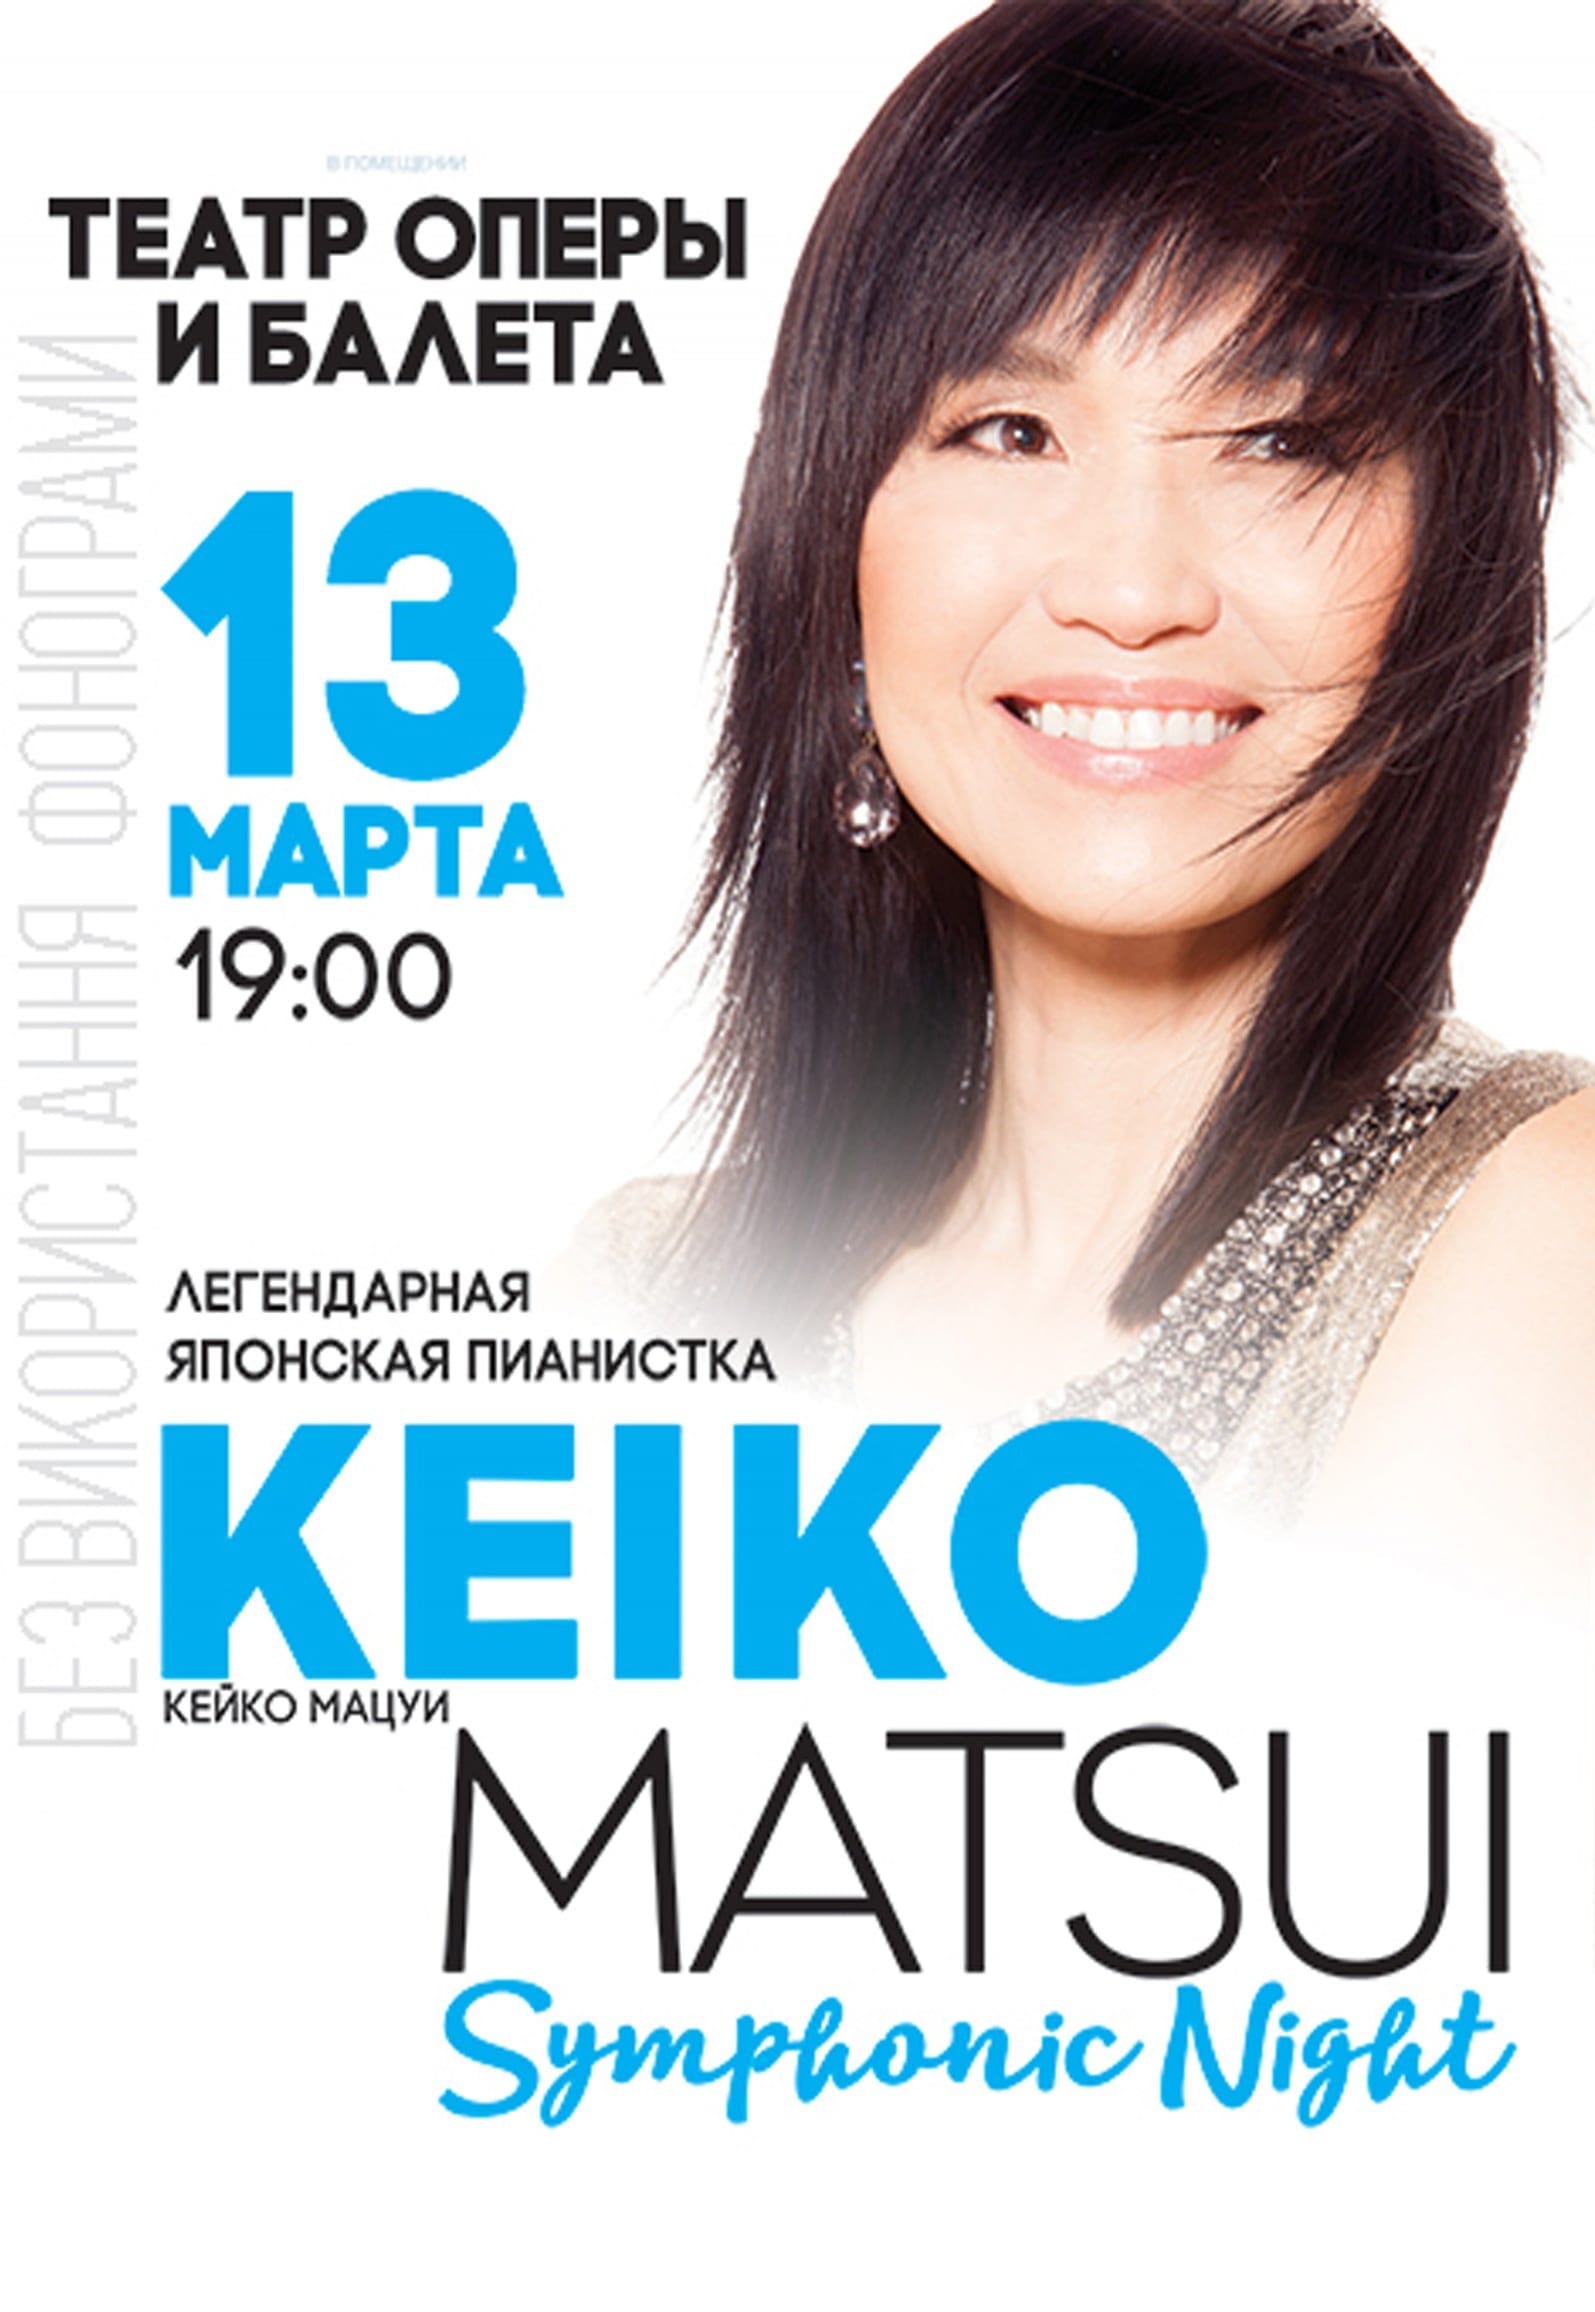 Keiko Matsui Днепр, купить билеты